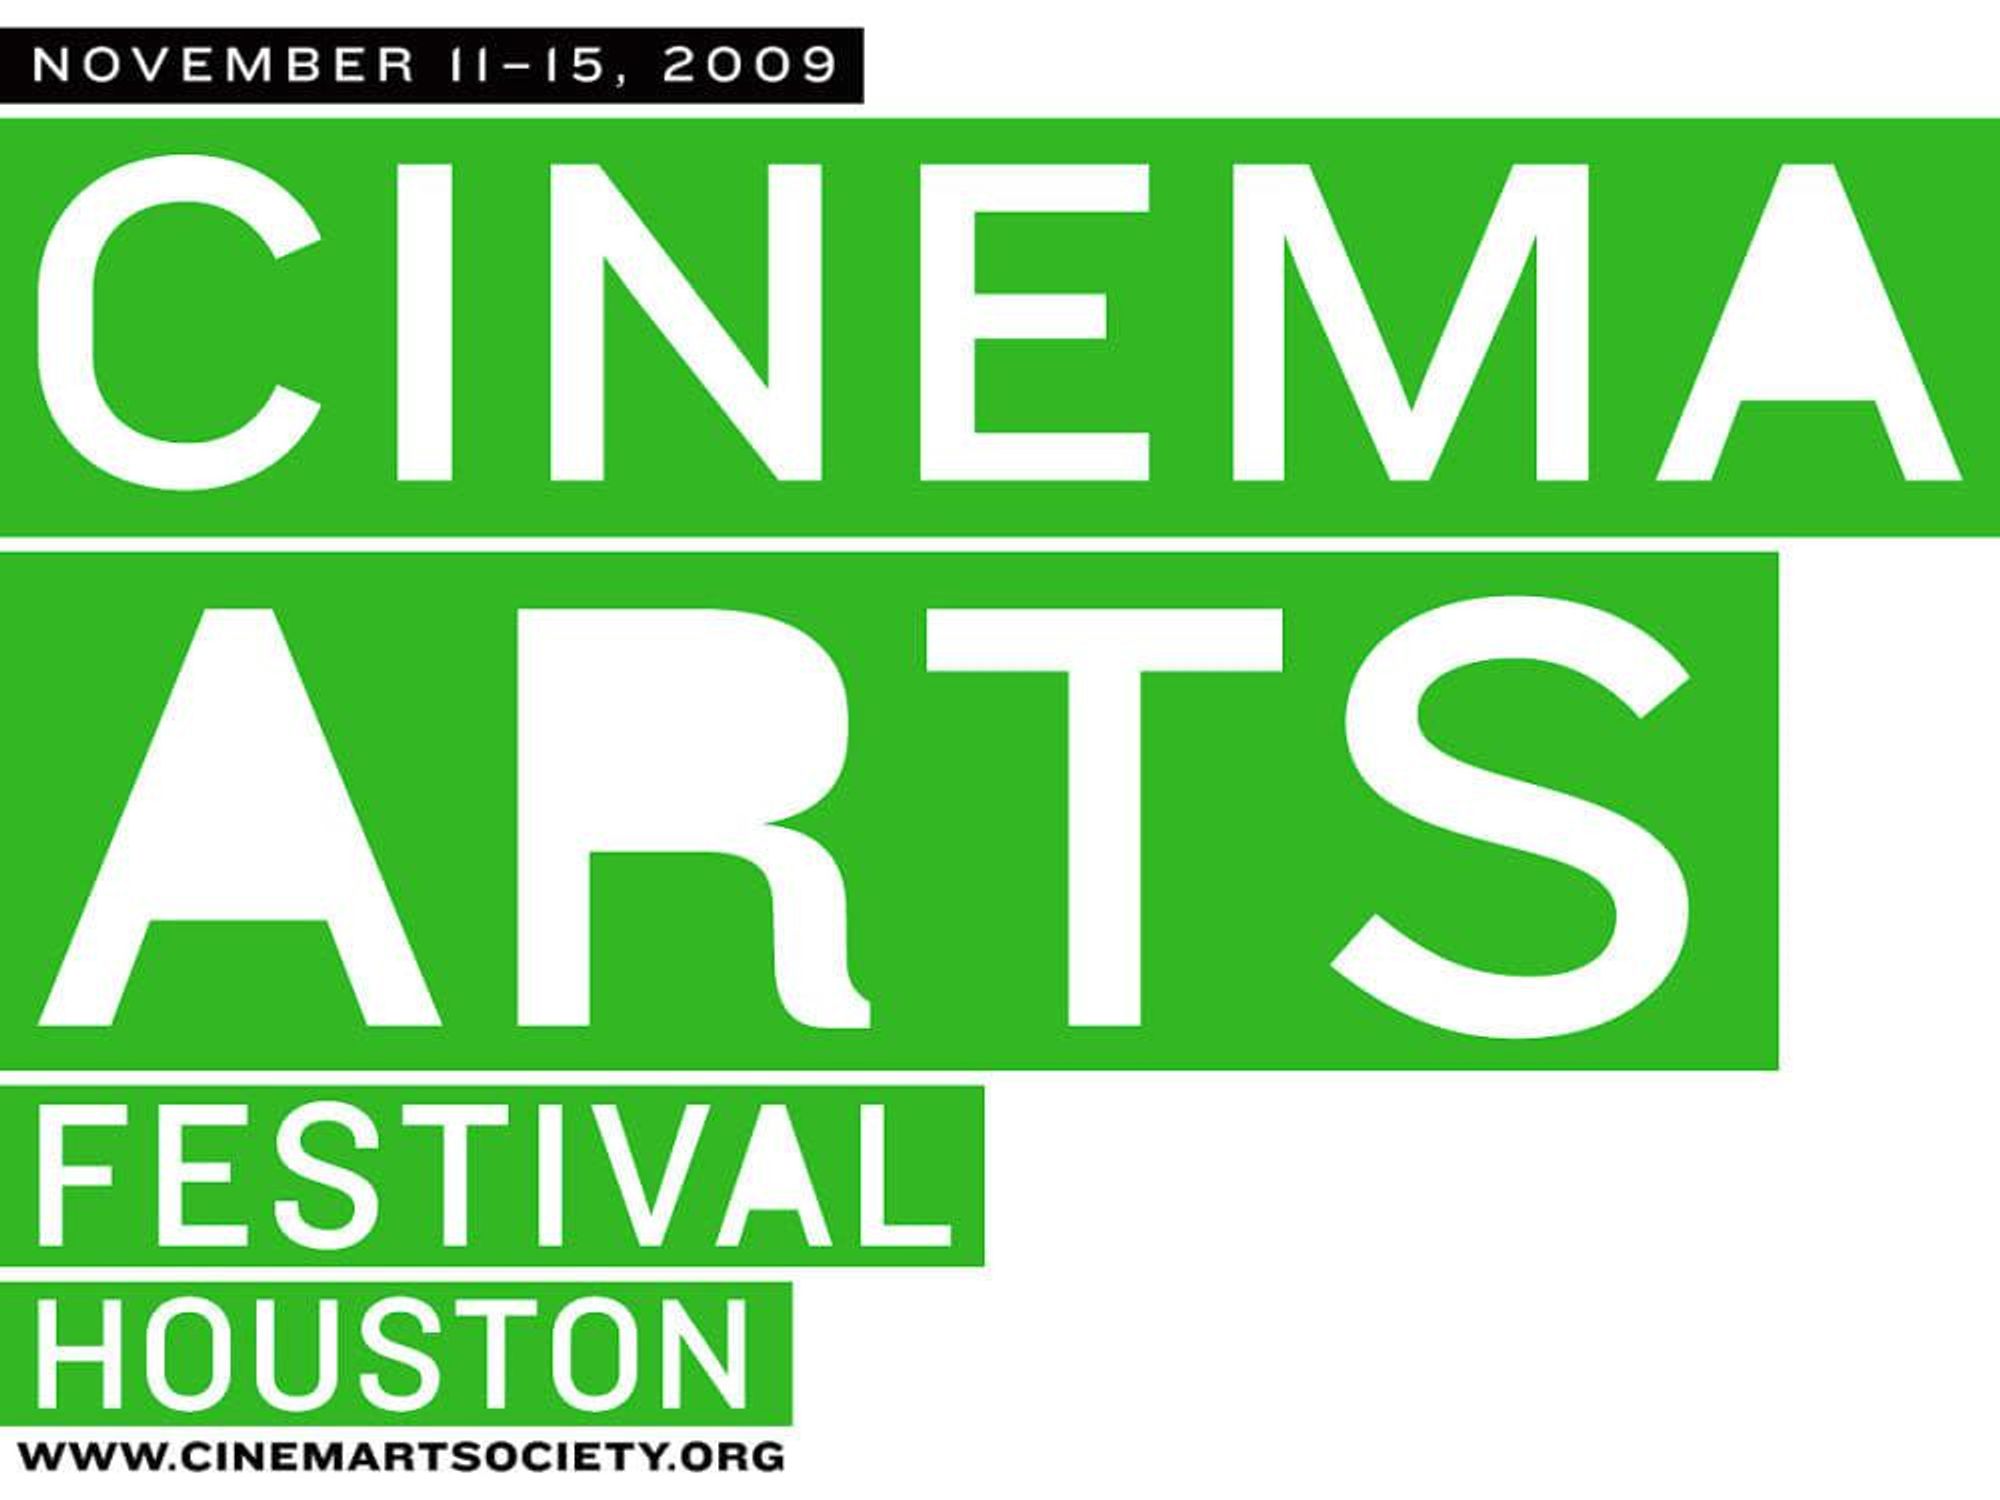 News_Cinema Arts Festival Houston 2009_logo